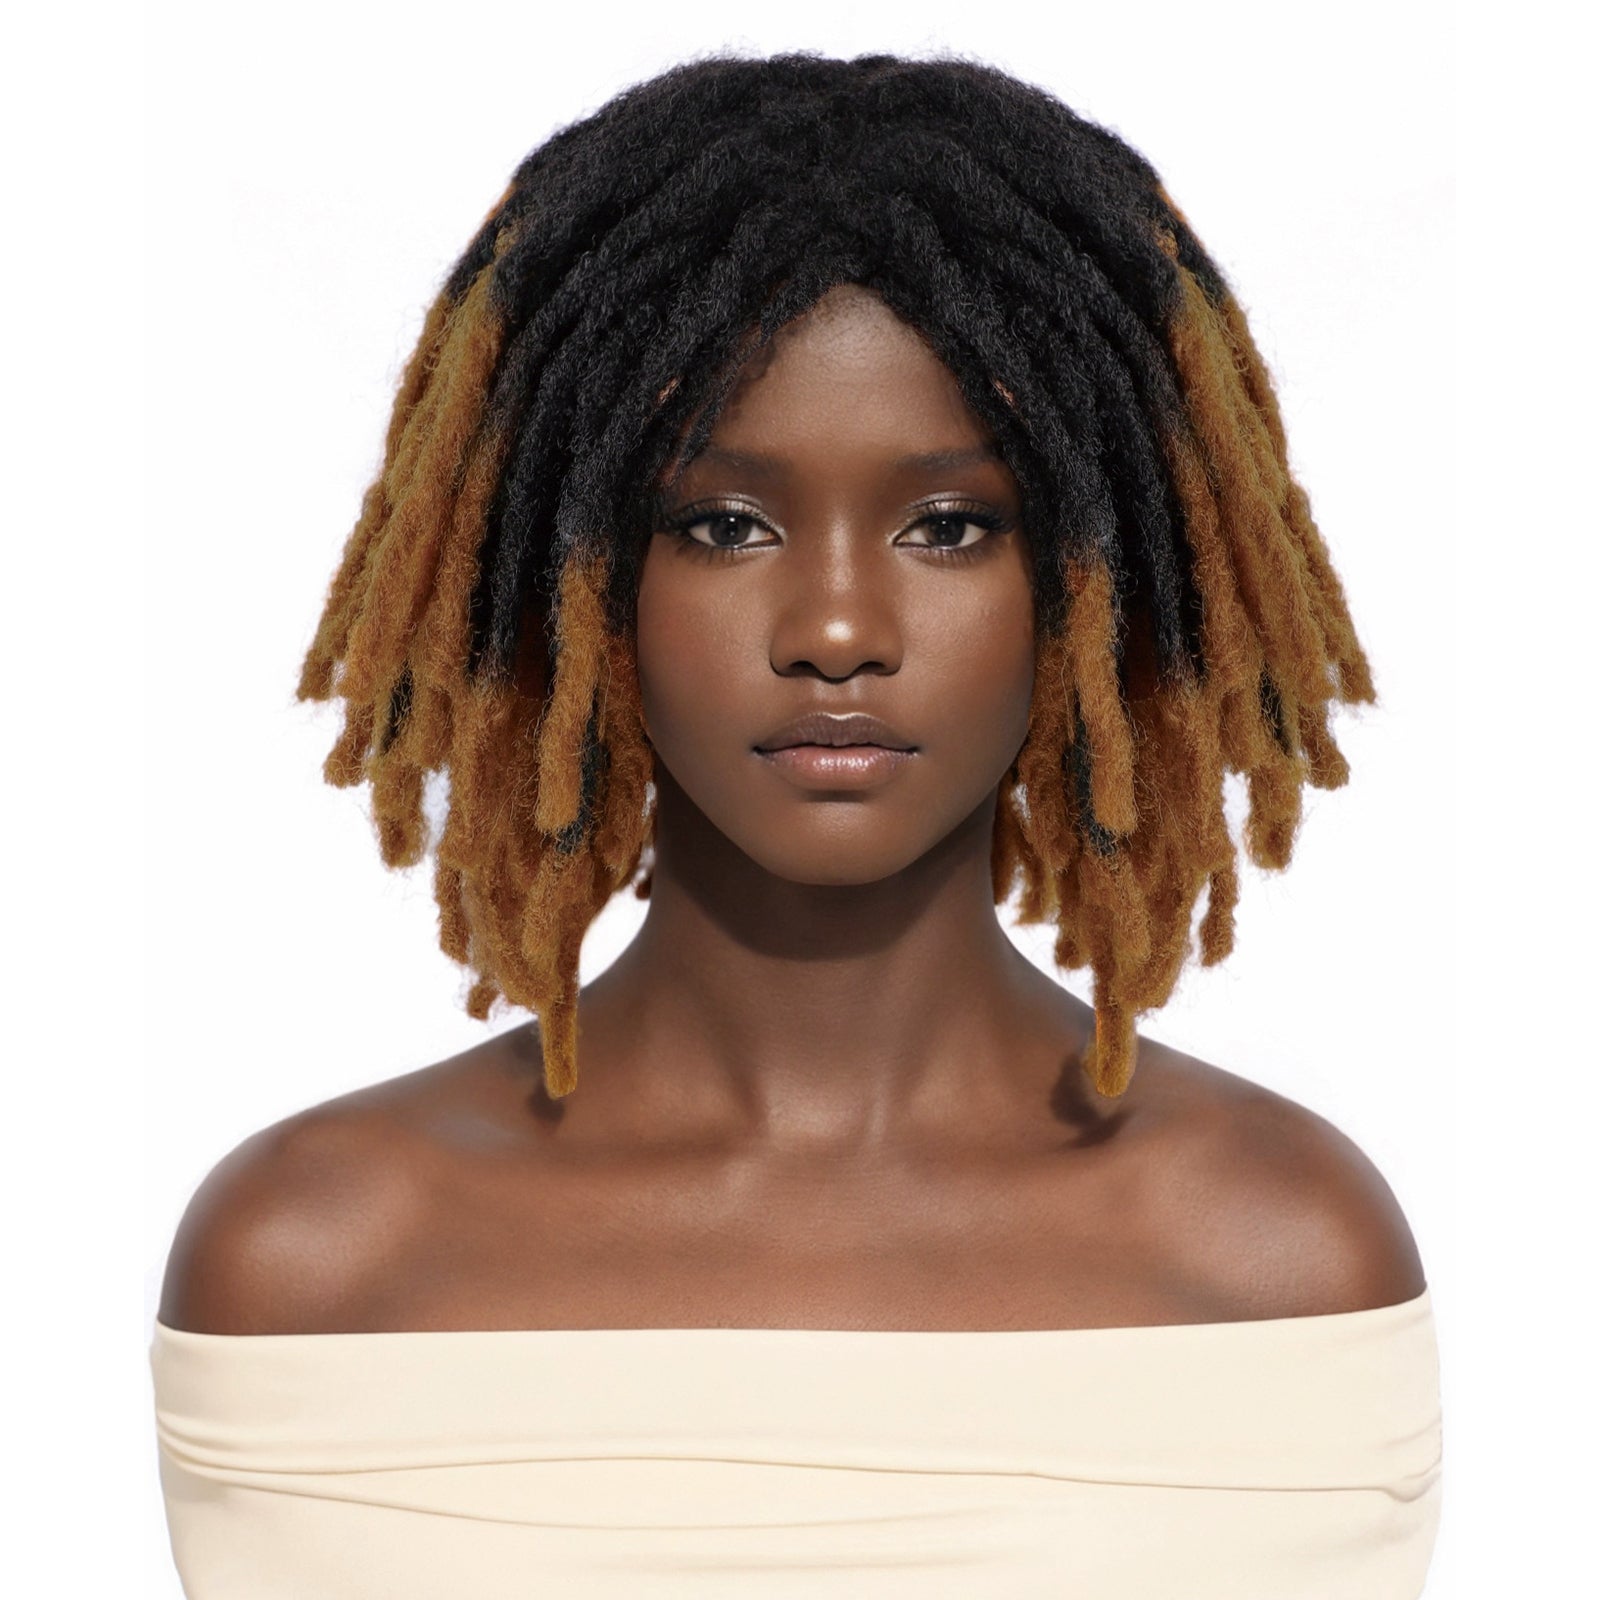 Short Dreadlocks Braided Wig 8inch Ombre Brown Braiding Wig for Black Women